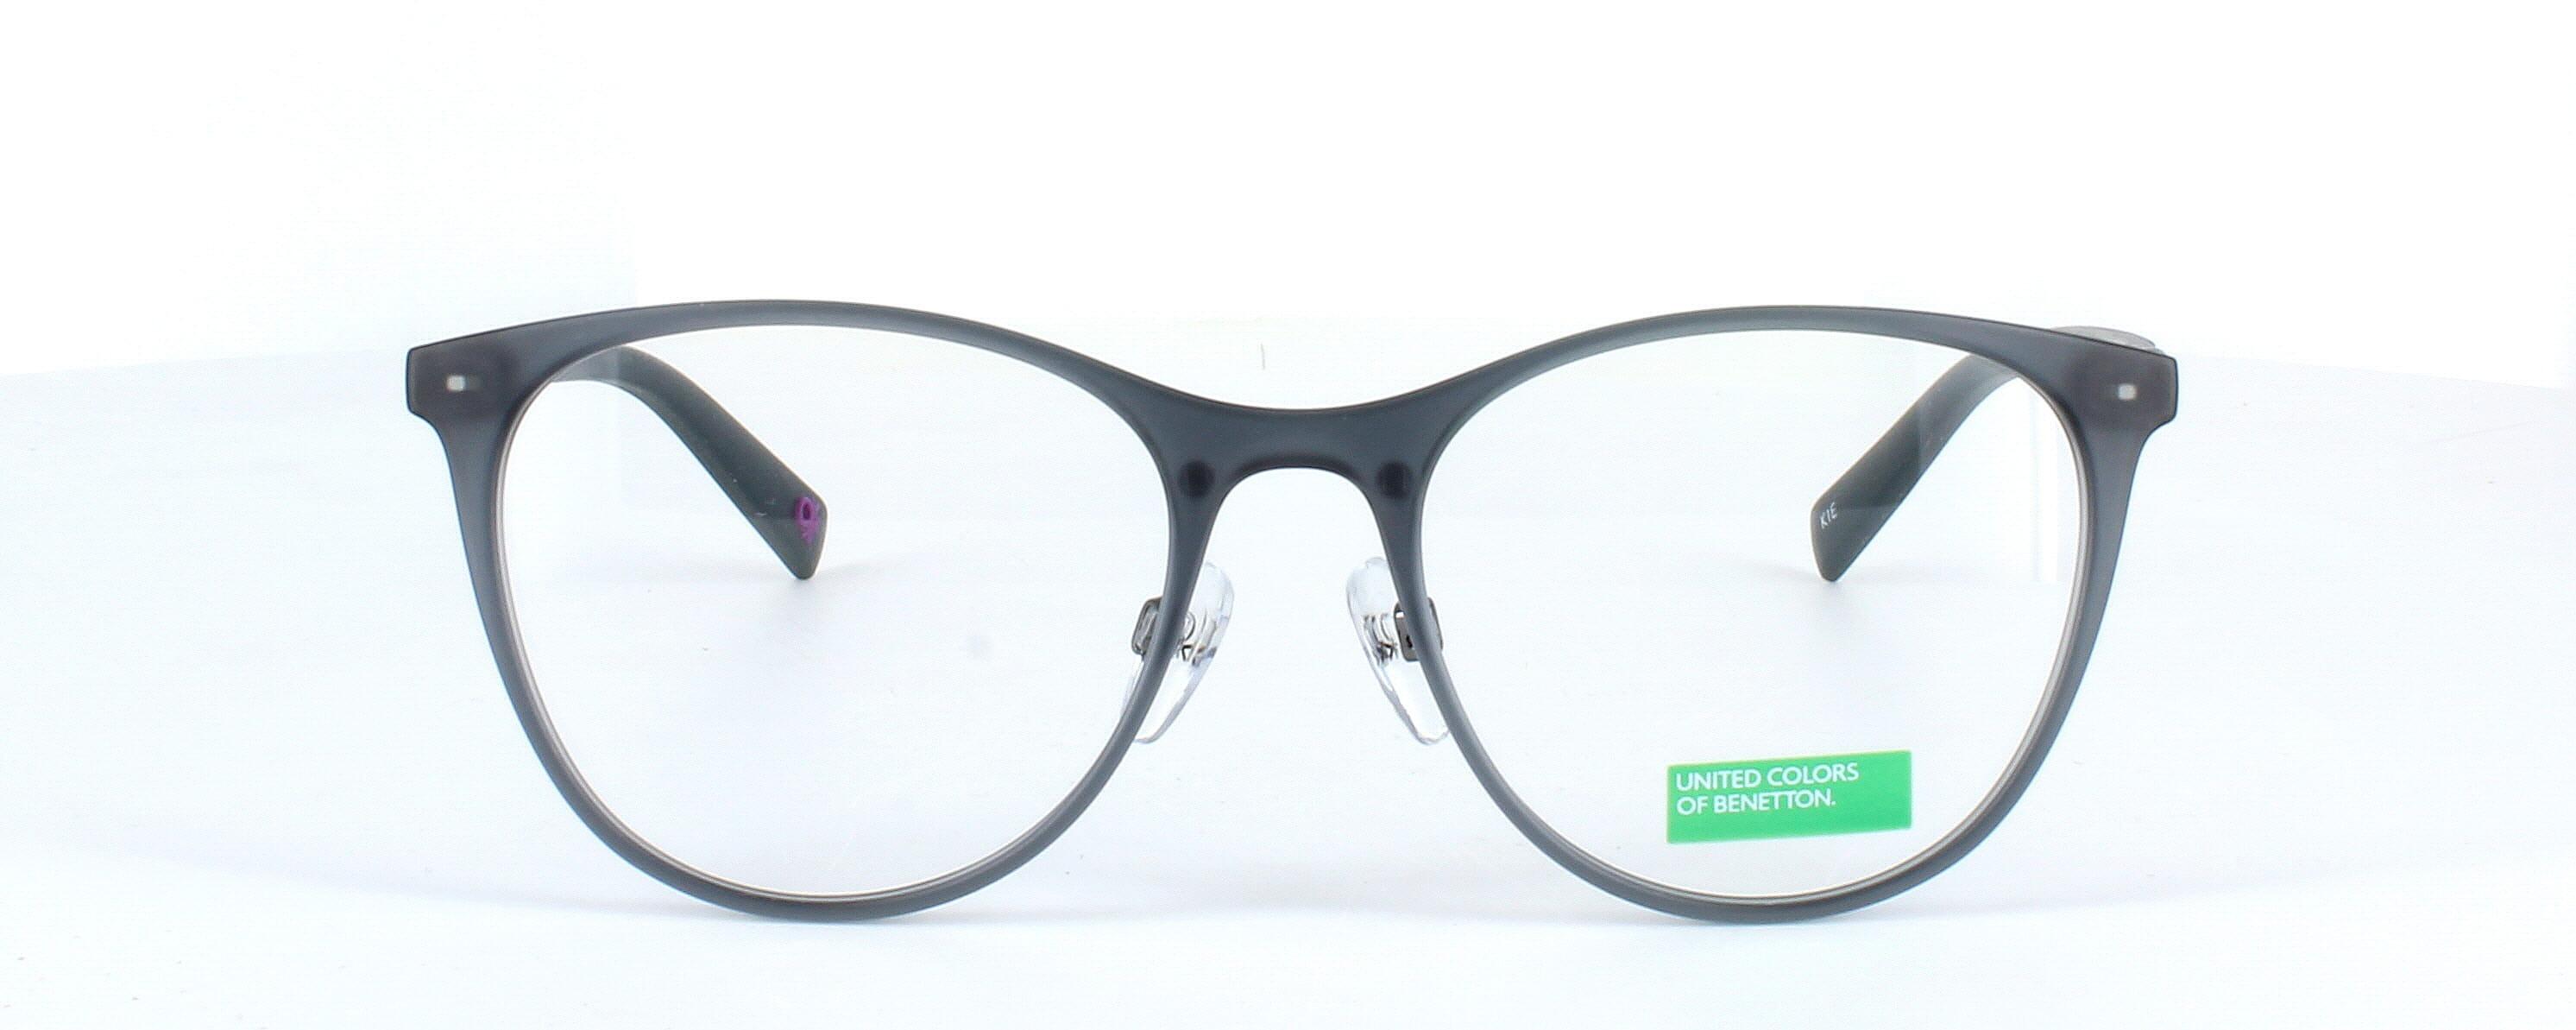 Benetton BEO1012 921 - Ladies dark grey round shaped TR90 lightweight glasses - image view 2